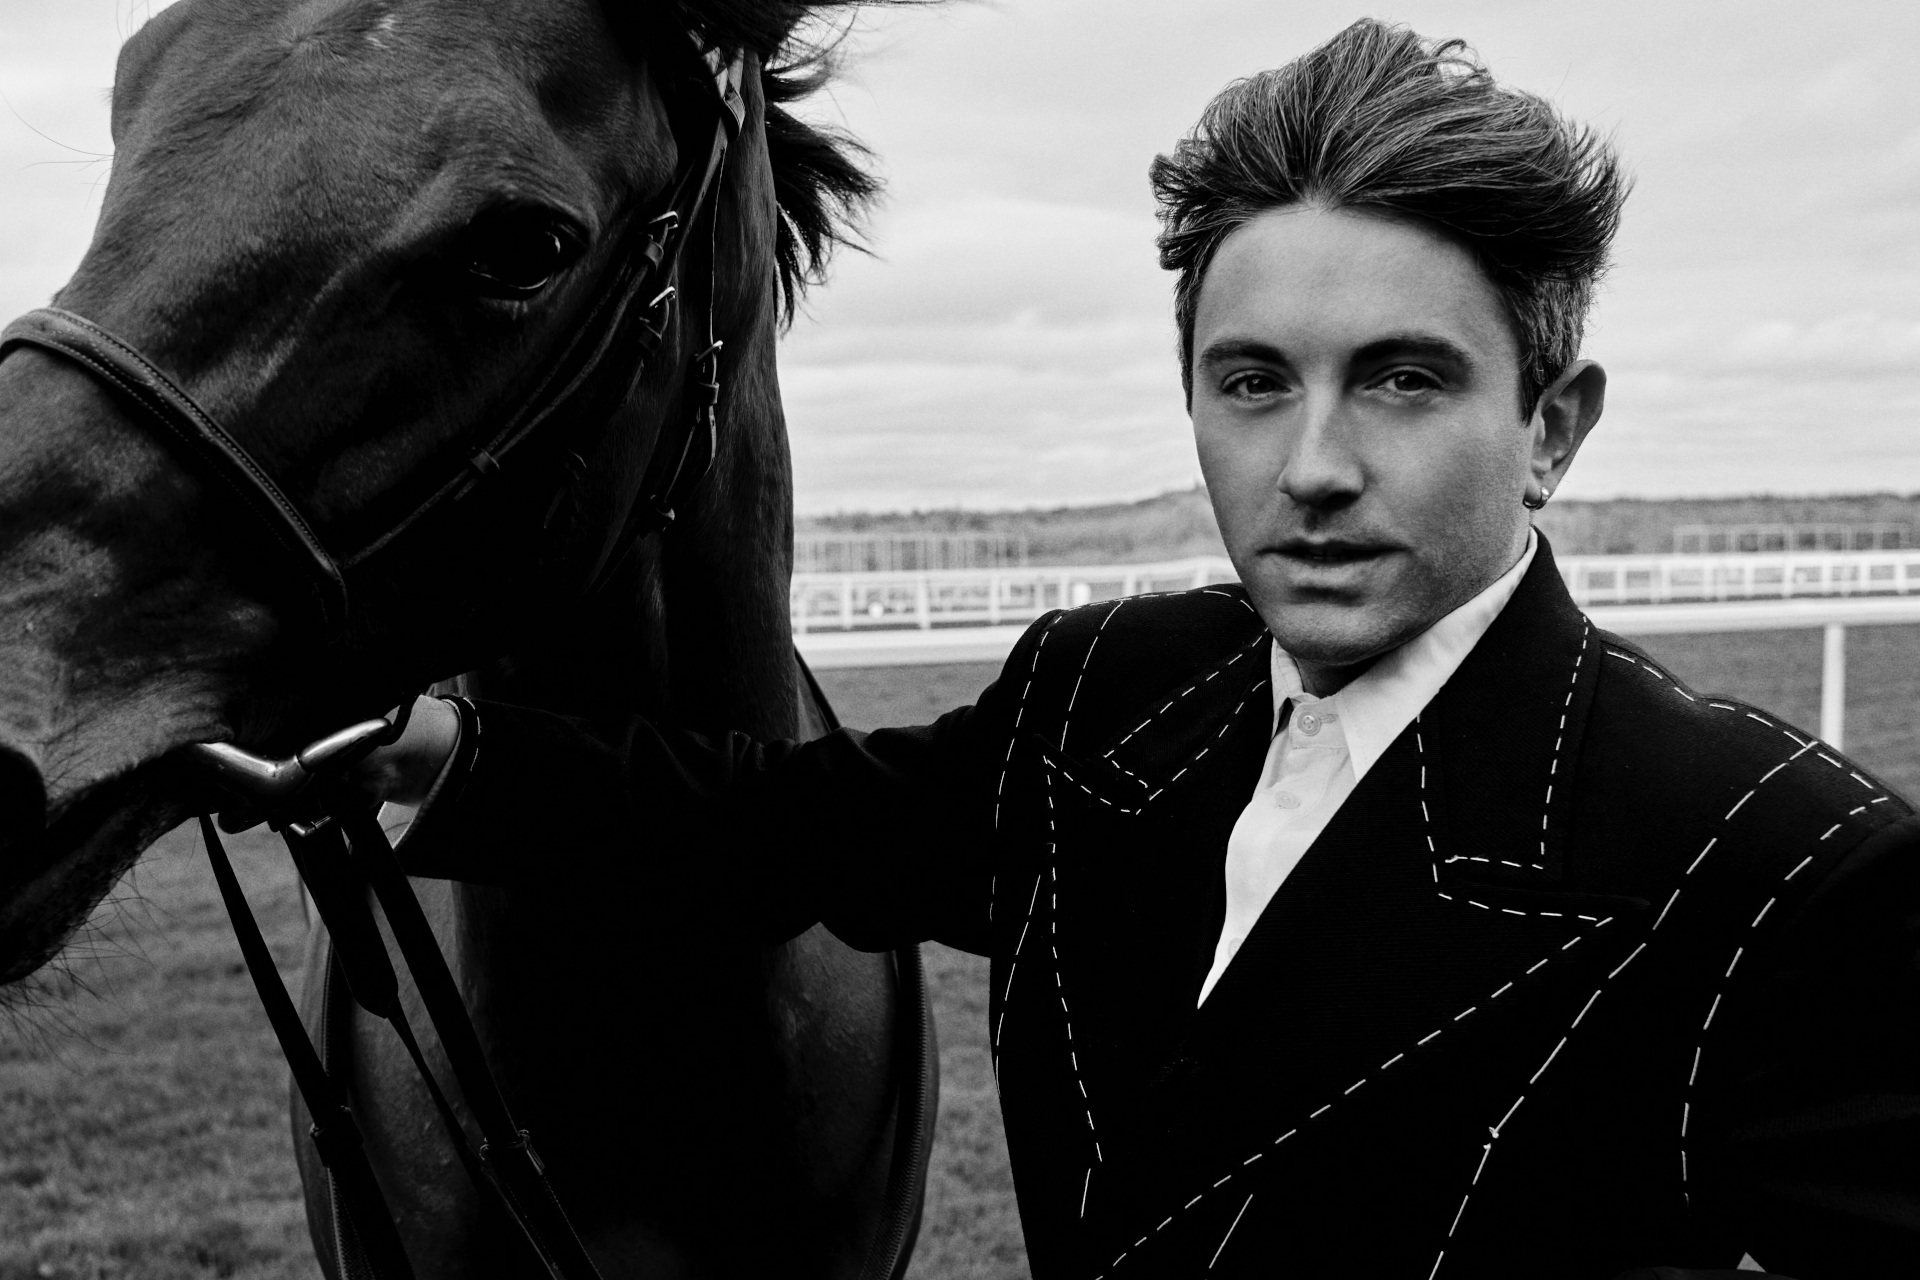 Daniel w. Fletcher with horse